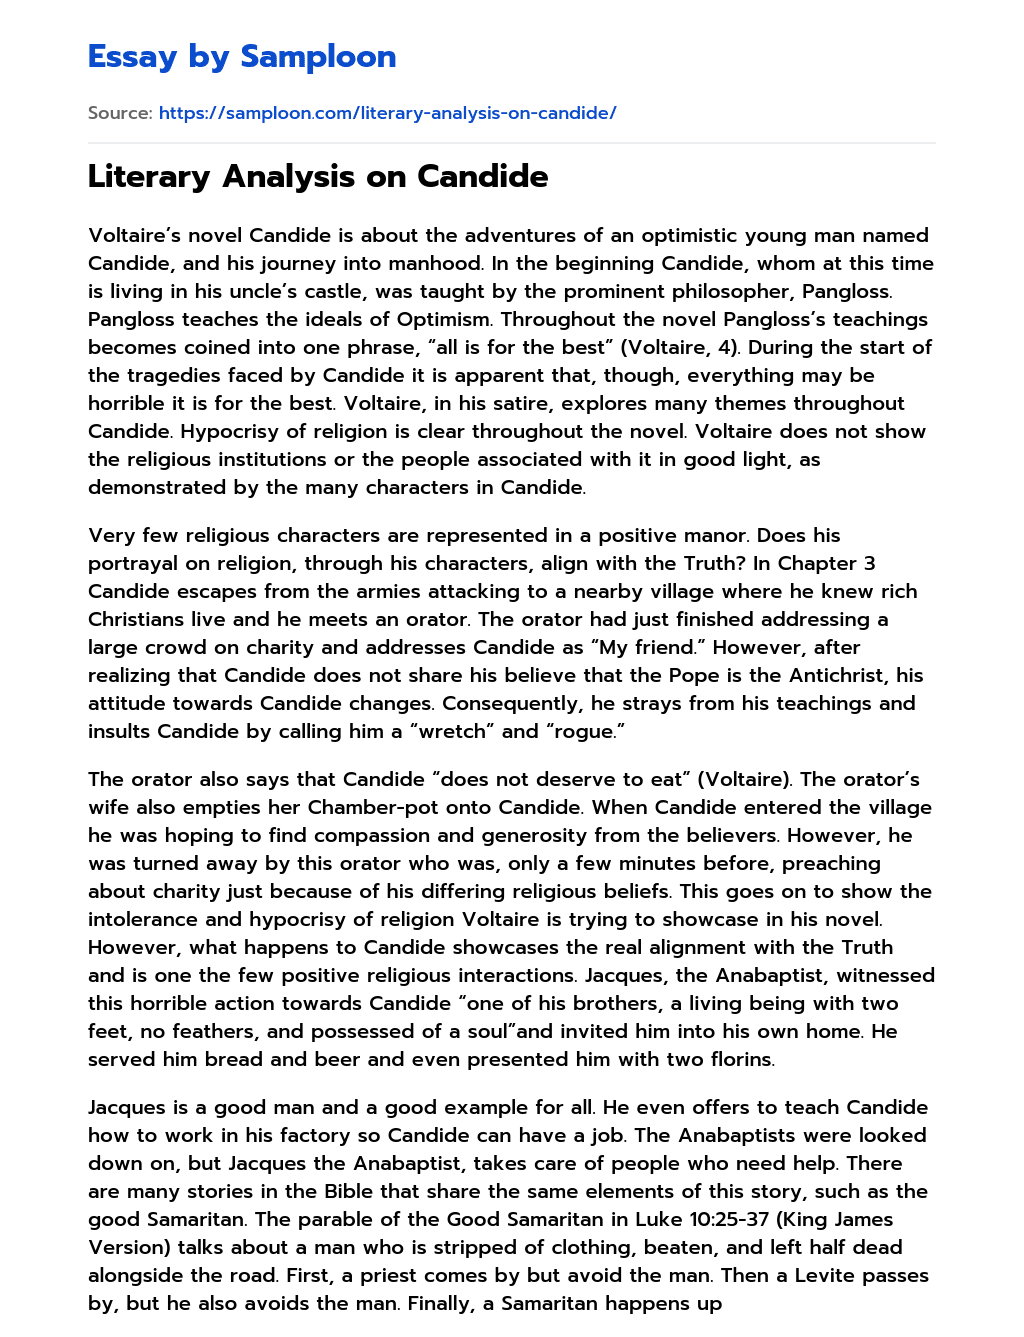 Literary Analysis on Candide essay